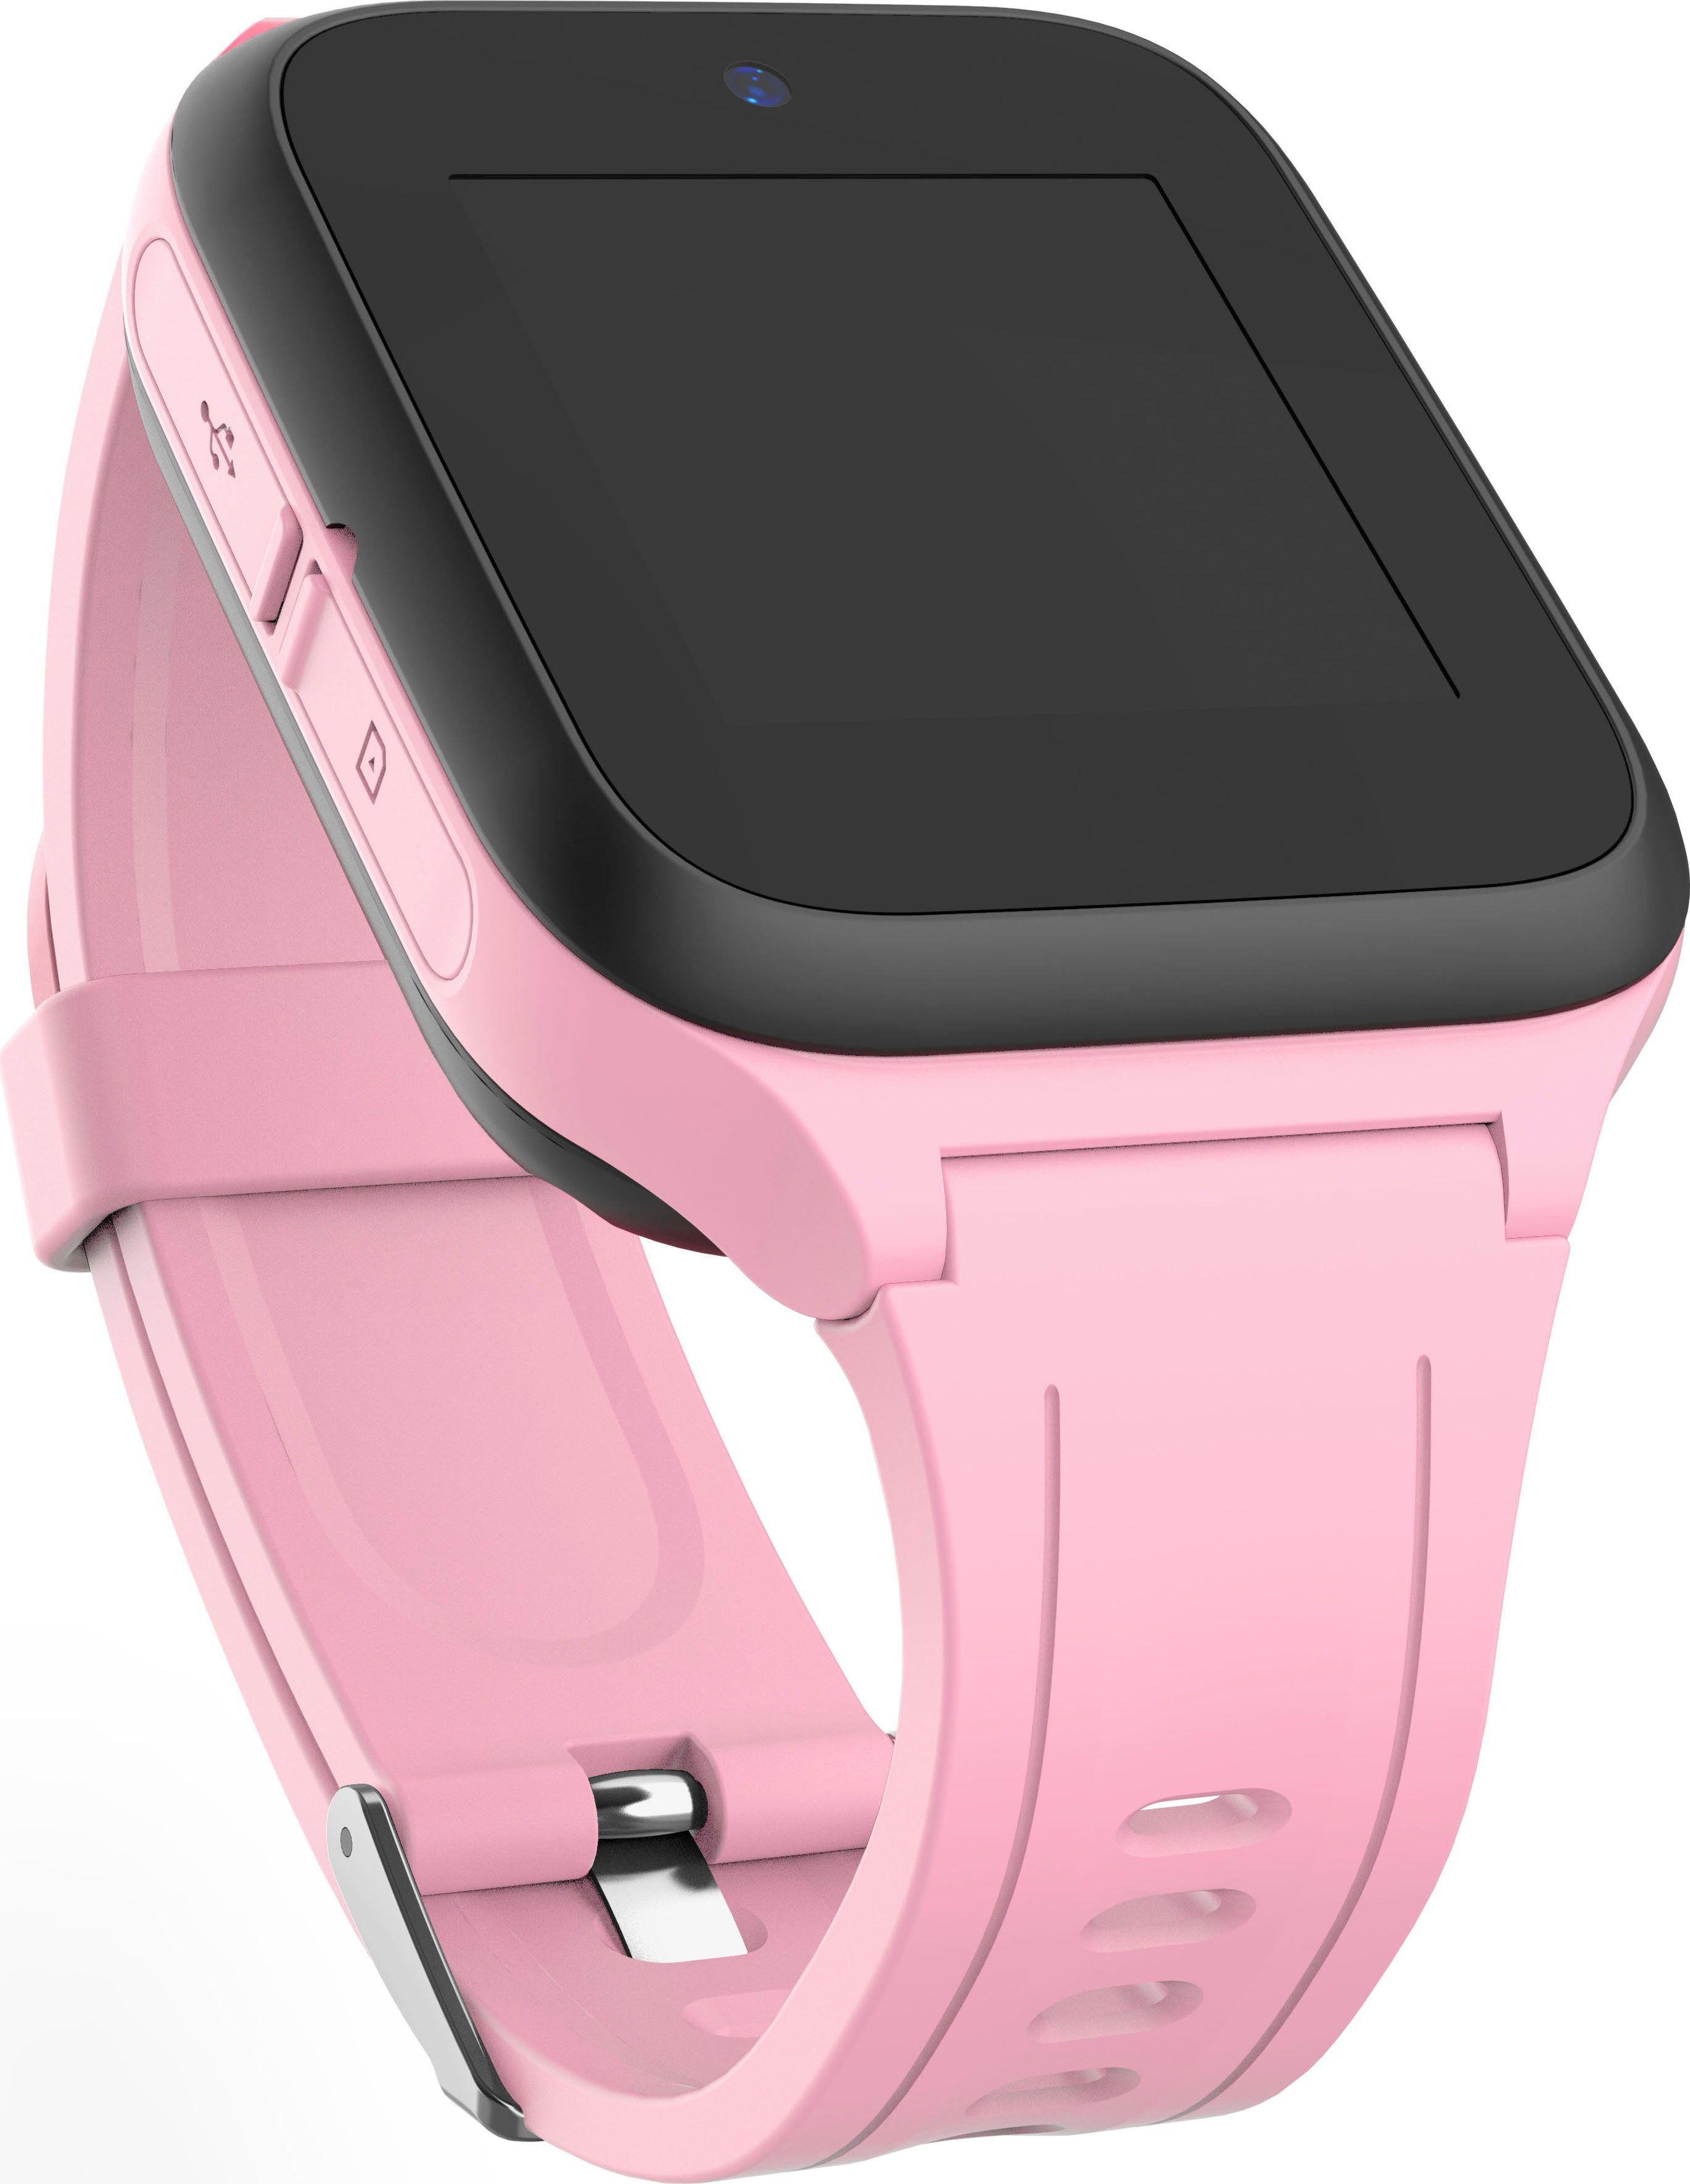 TCL MOVETIME MT40 Smartwatch (3,3 cm/1,3 rosa rosa Proprietär) Zoll, 